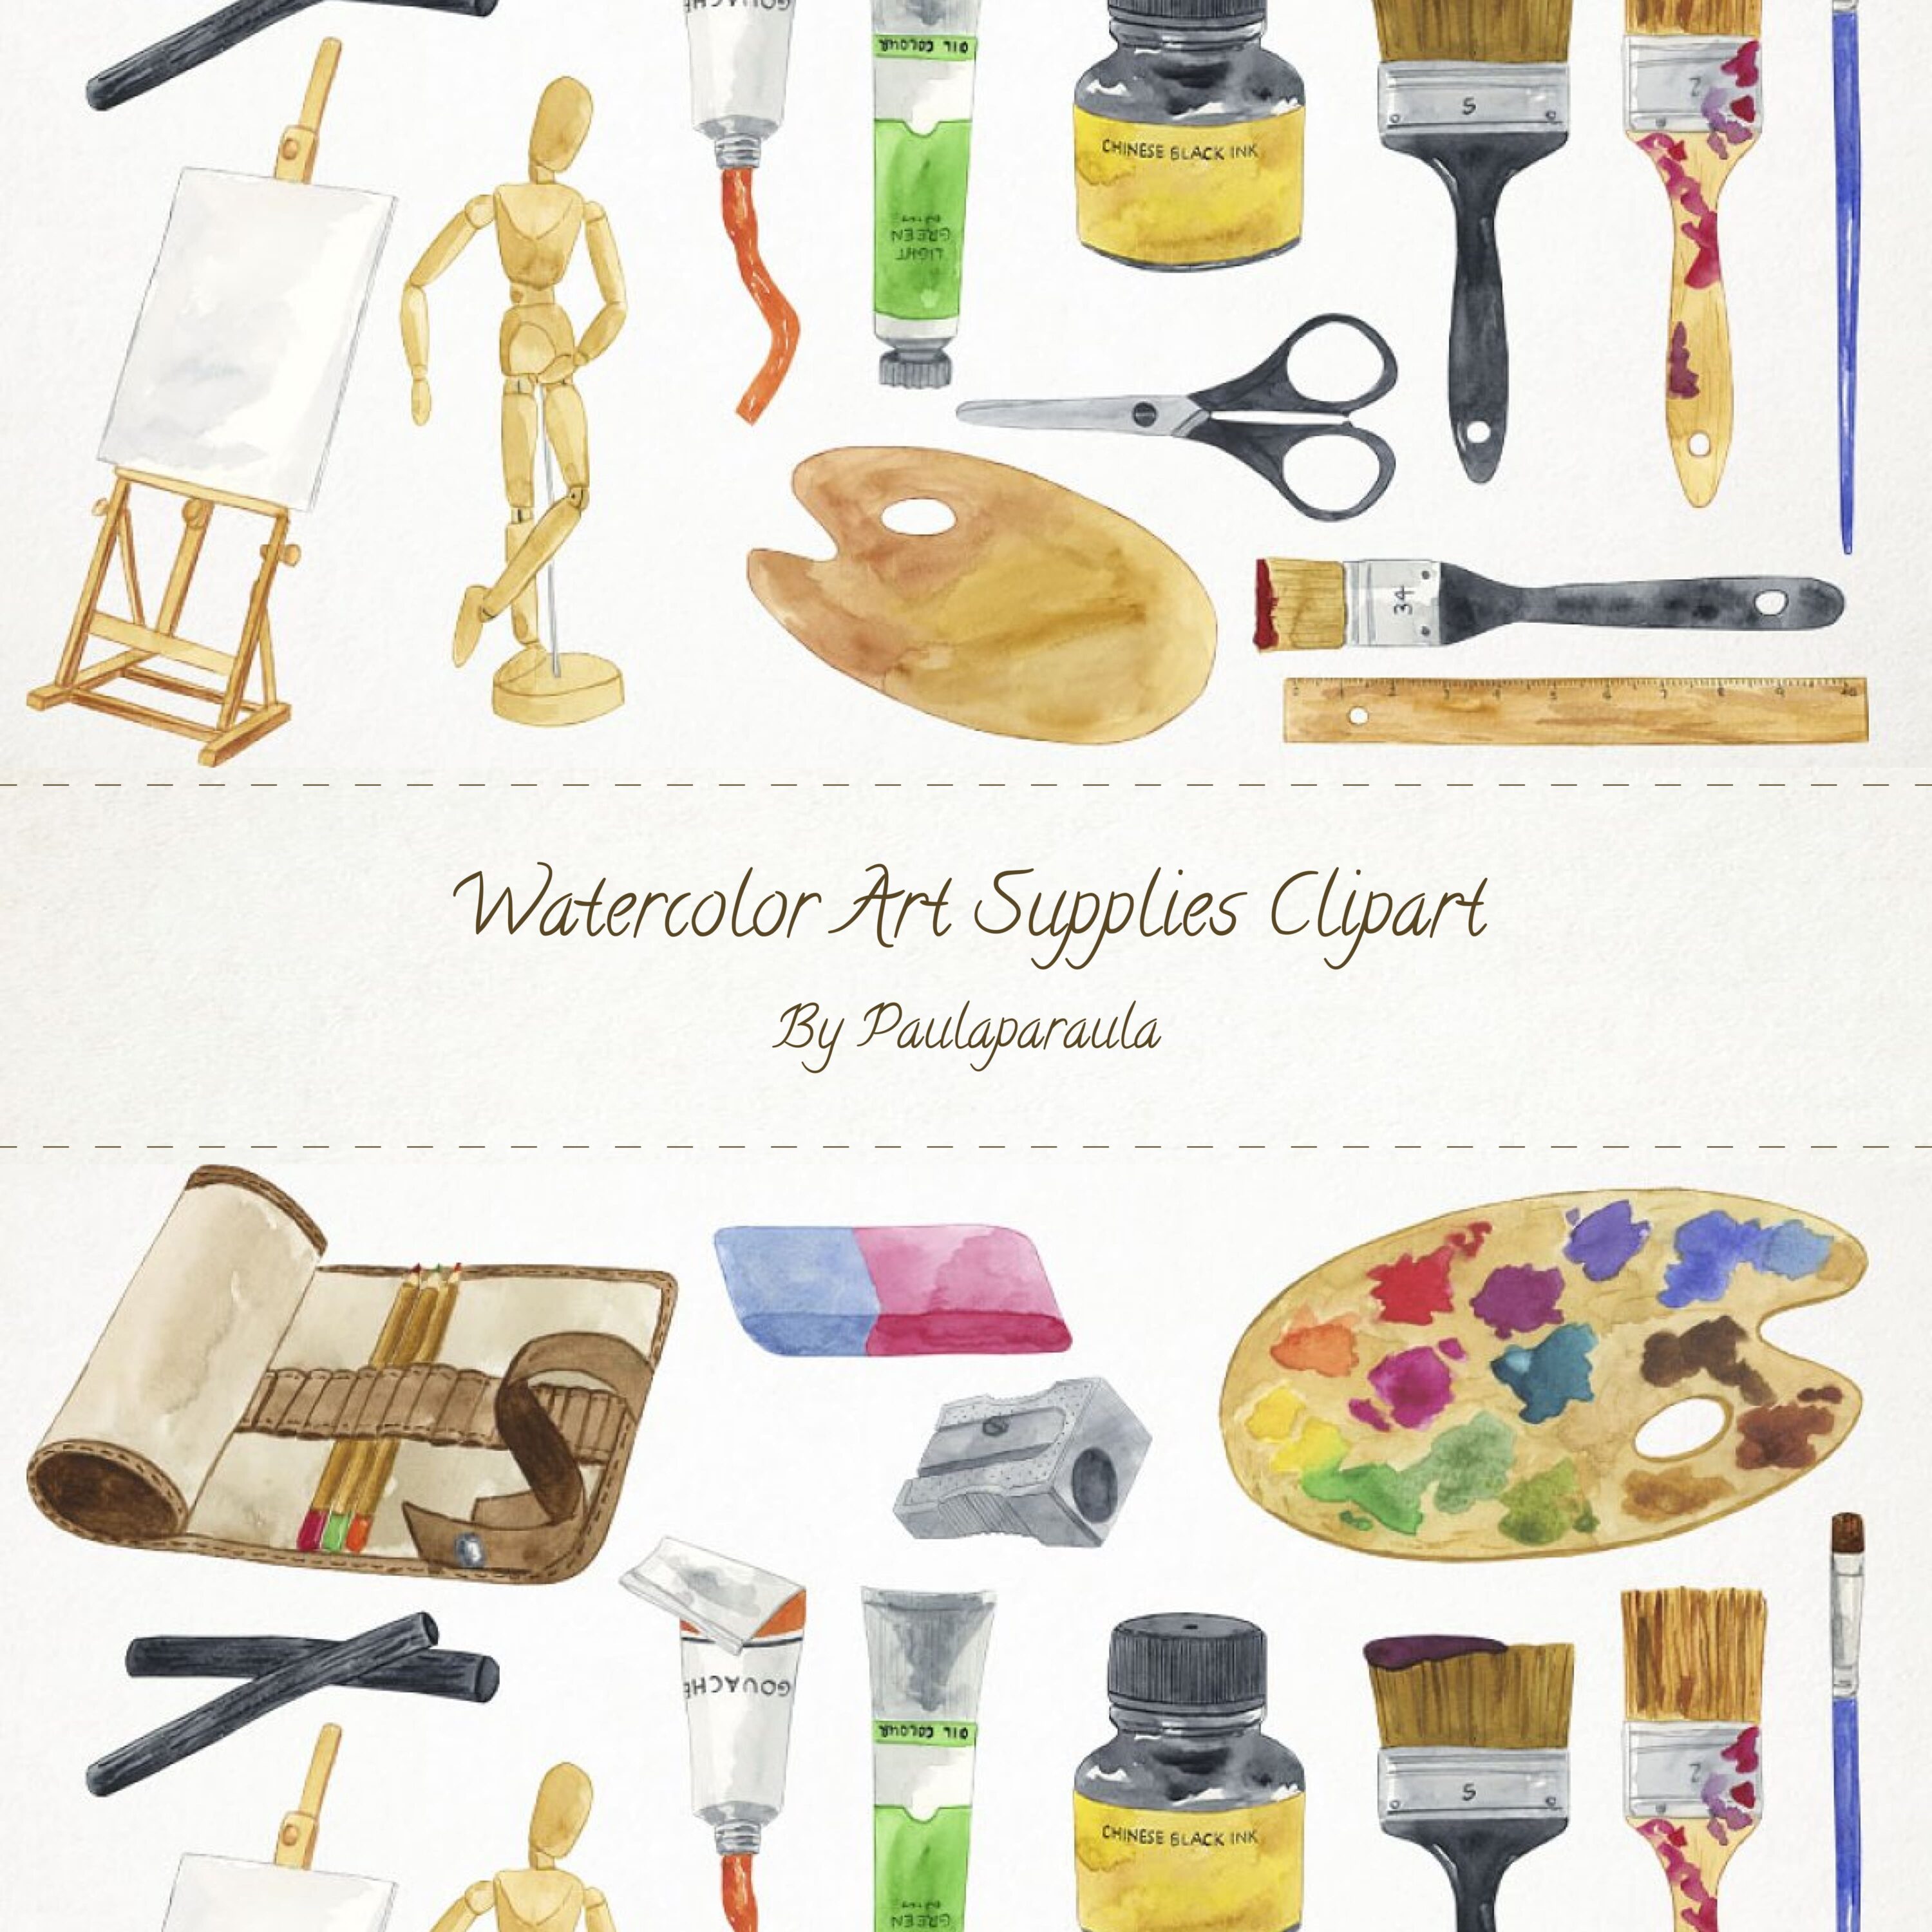 Watercolor Art Supplies Clipart.